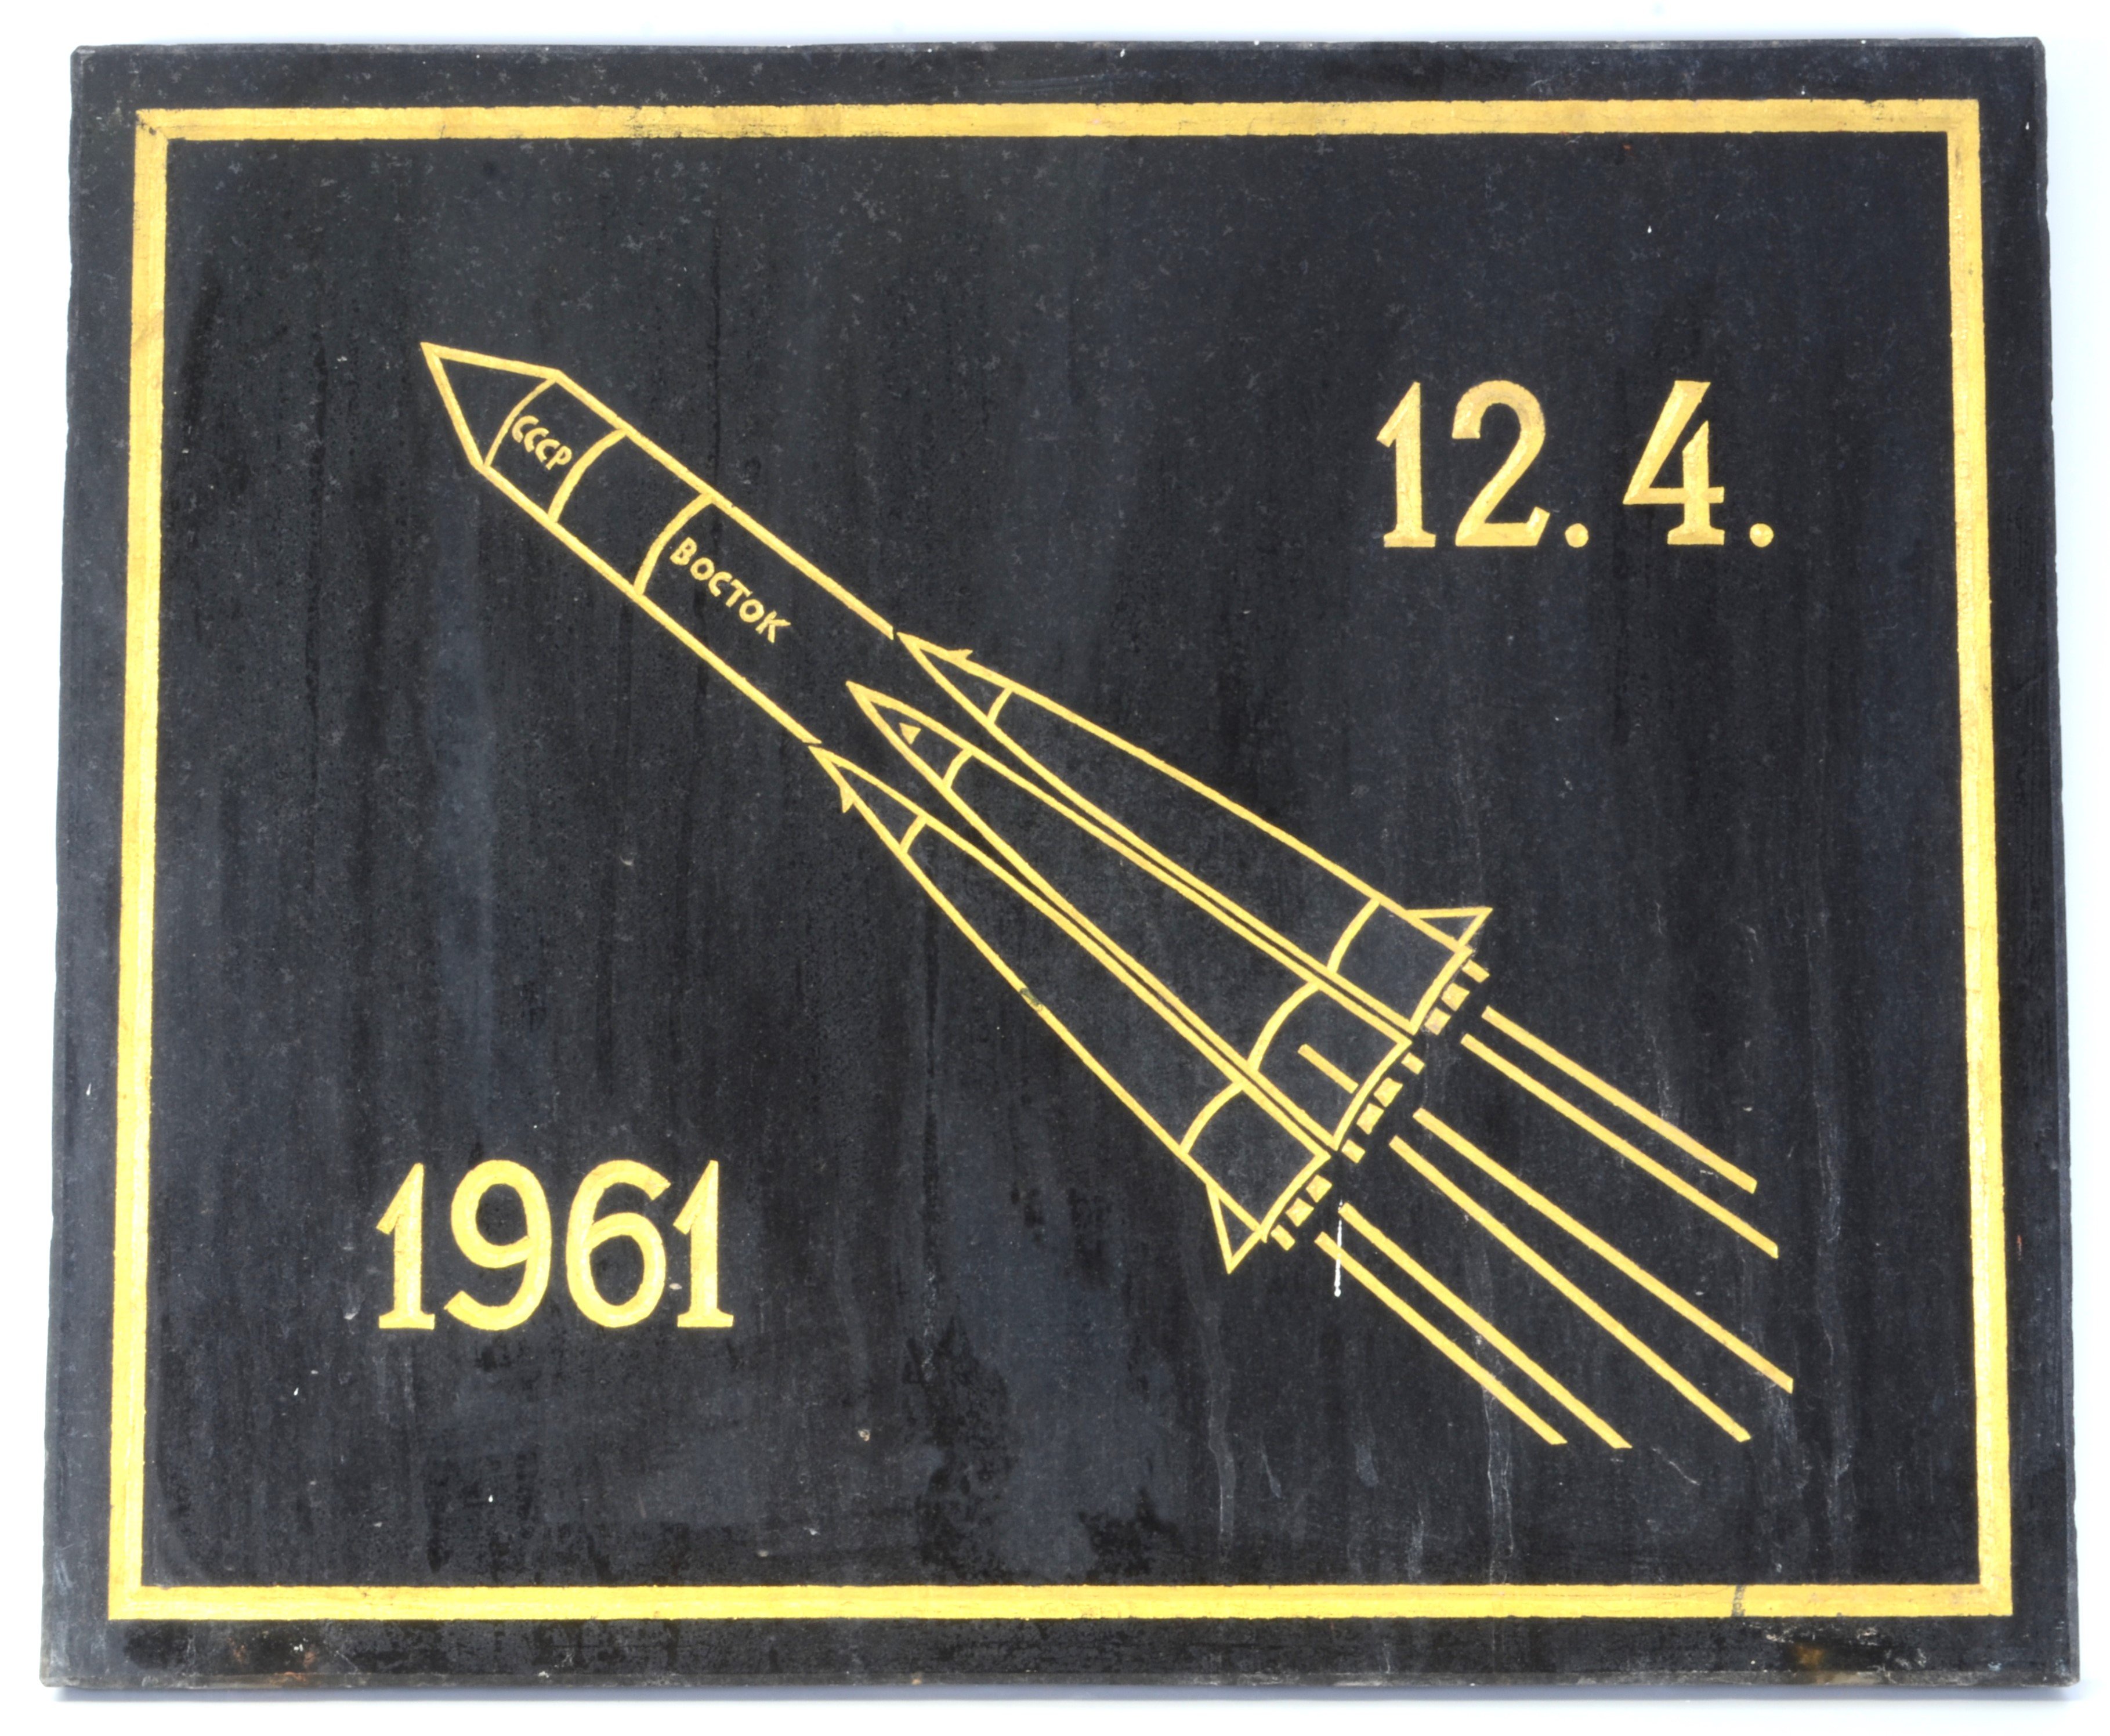 Tafel: Wostok 1 (Восток-1) (DDR Geschichtsmuseum im Dokumentationszentrum Perleberg CC BY-SA)